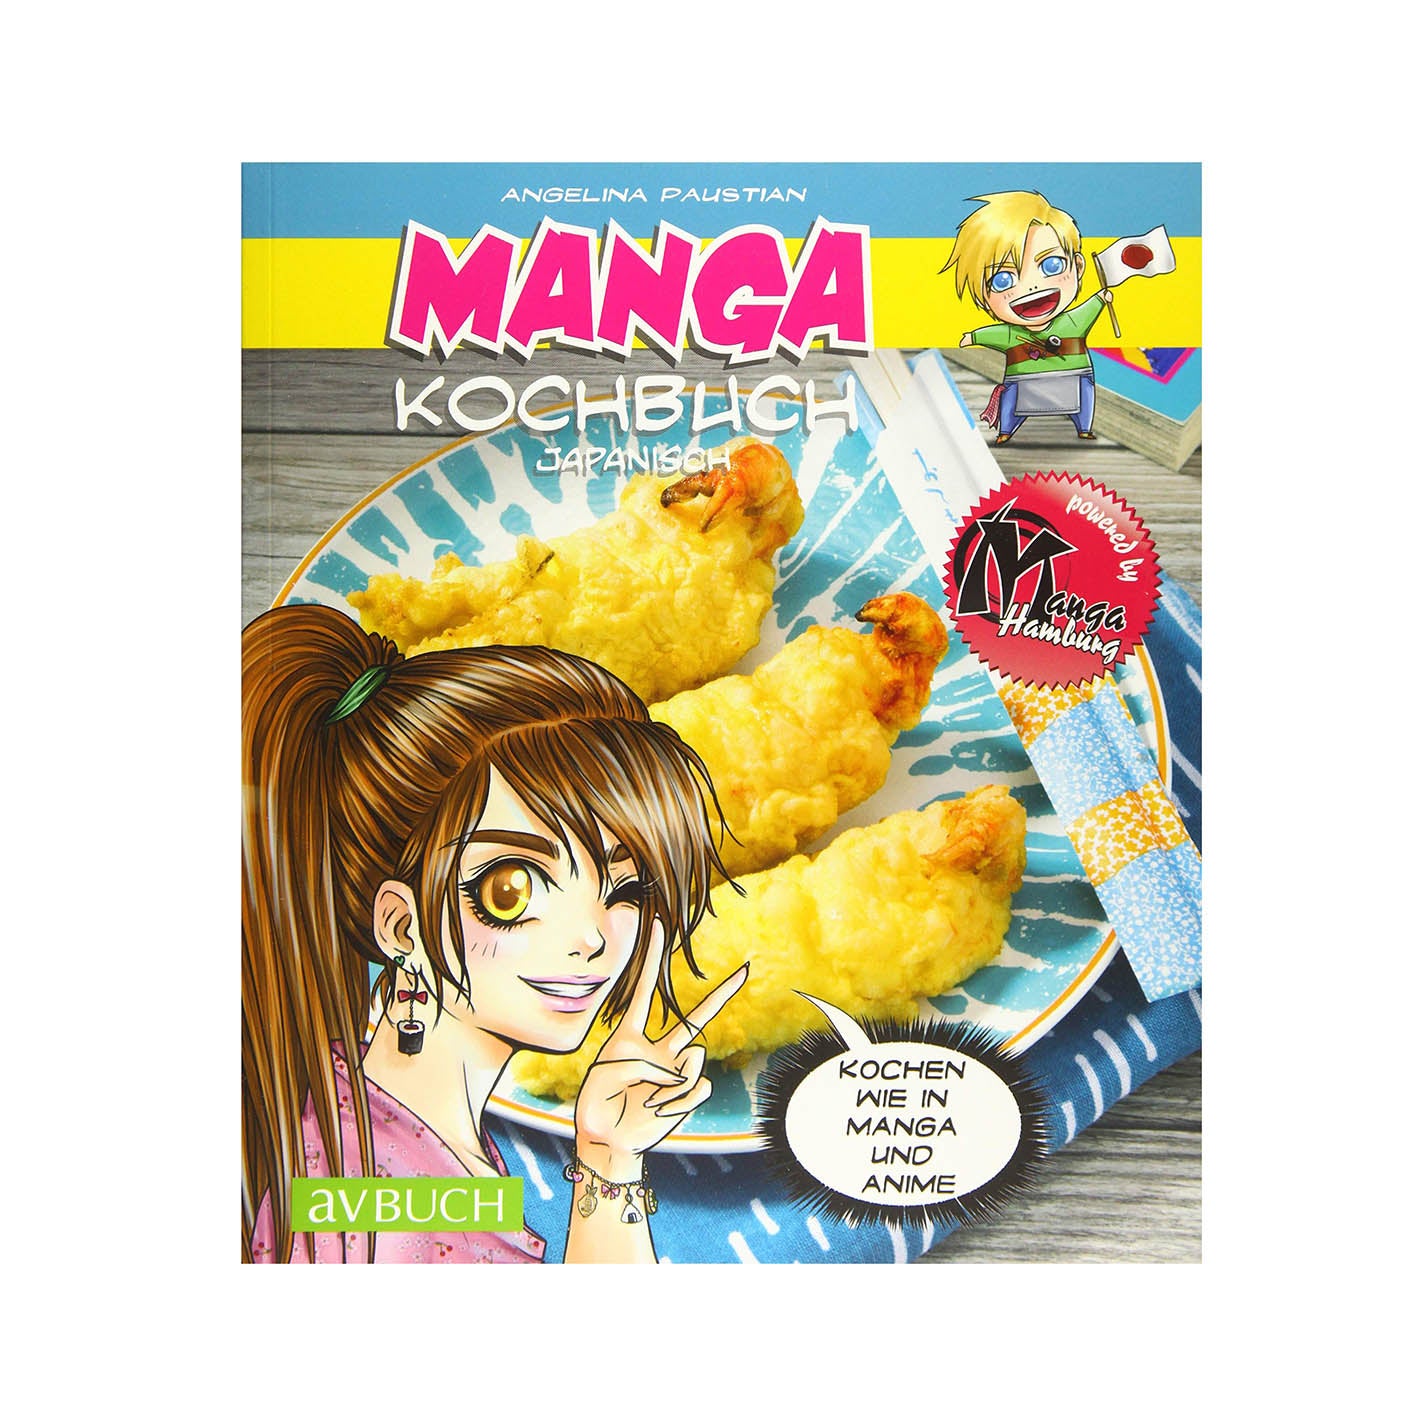 Angelina Paustian - Manga Kochbuch japanisch: Kochen wie in Manga und Anime